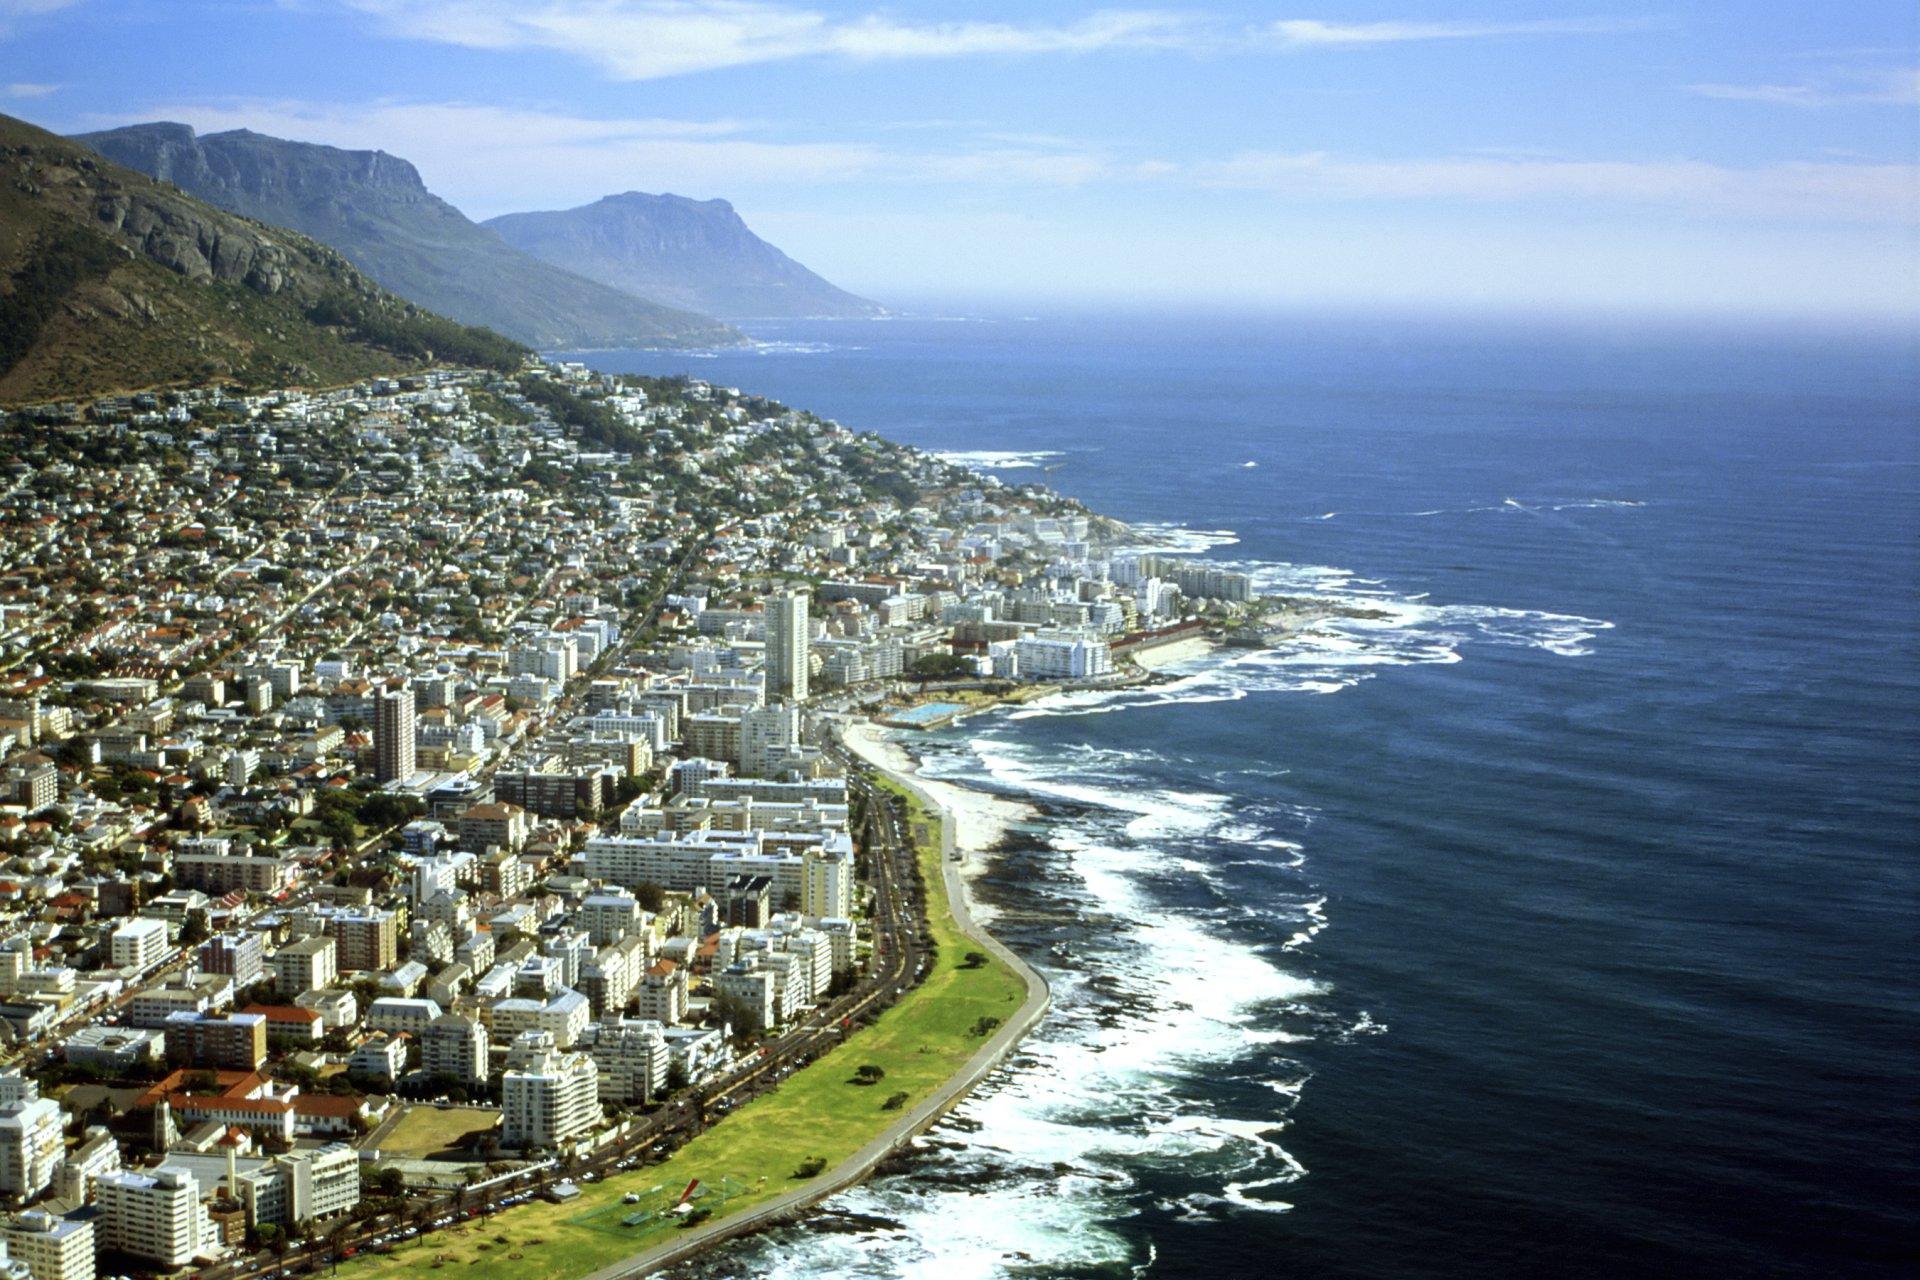 Cape town. ЮАР Кейптаун. Южно-Африканская Республика (ЮАР). Африка город Кейптаун. Южная Африканская Республика города Кейптауна.